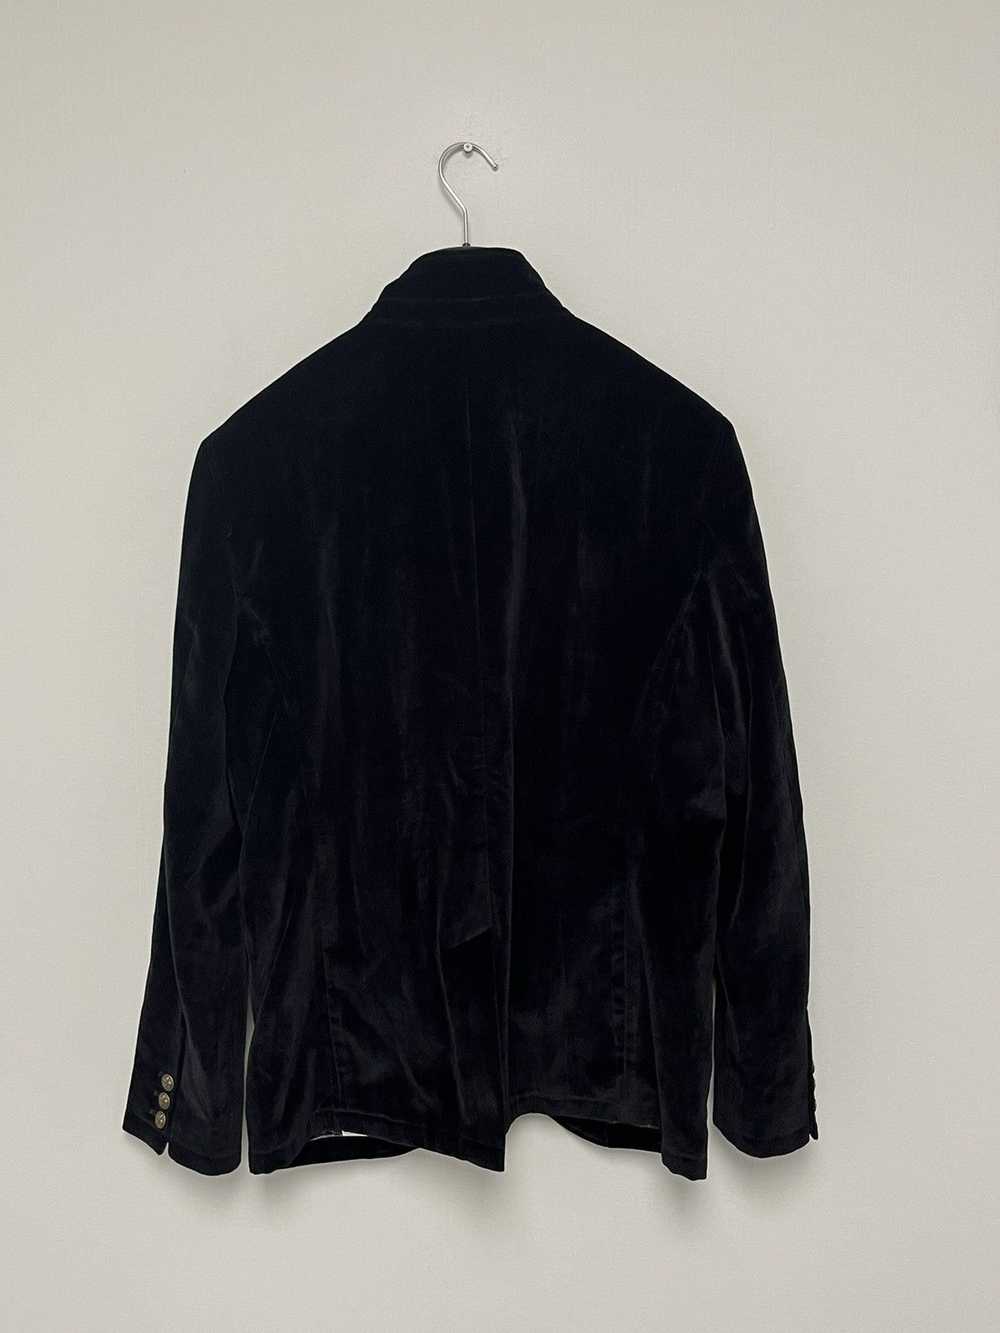 John Varvatos Crushed velvet jacket. Black. 50 - image 8